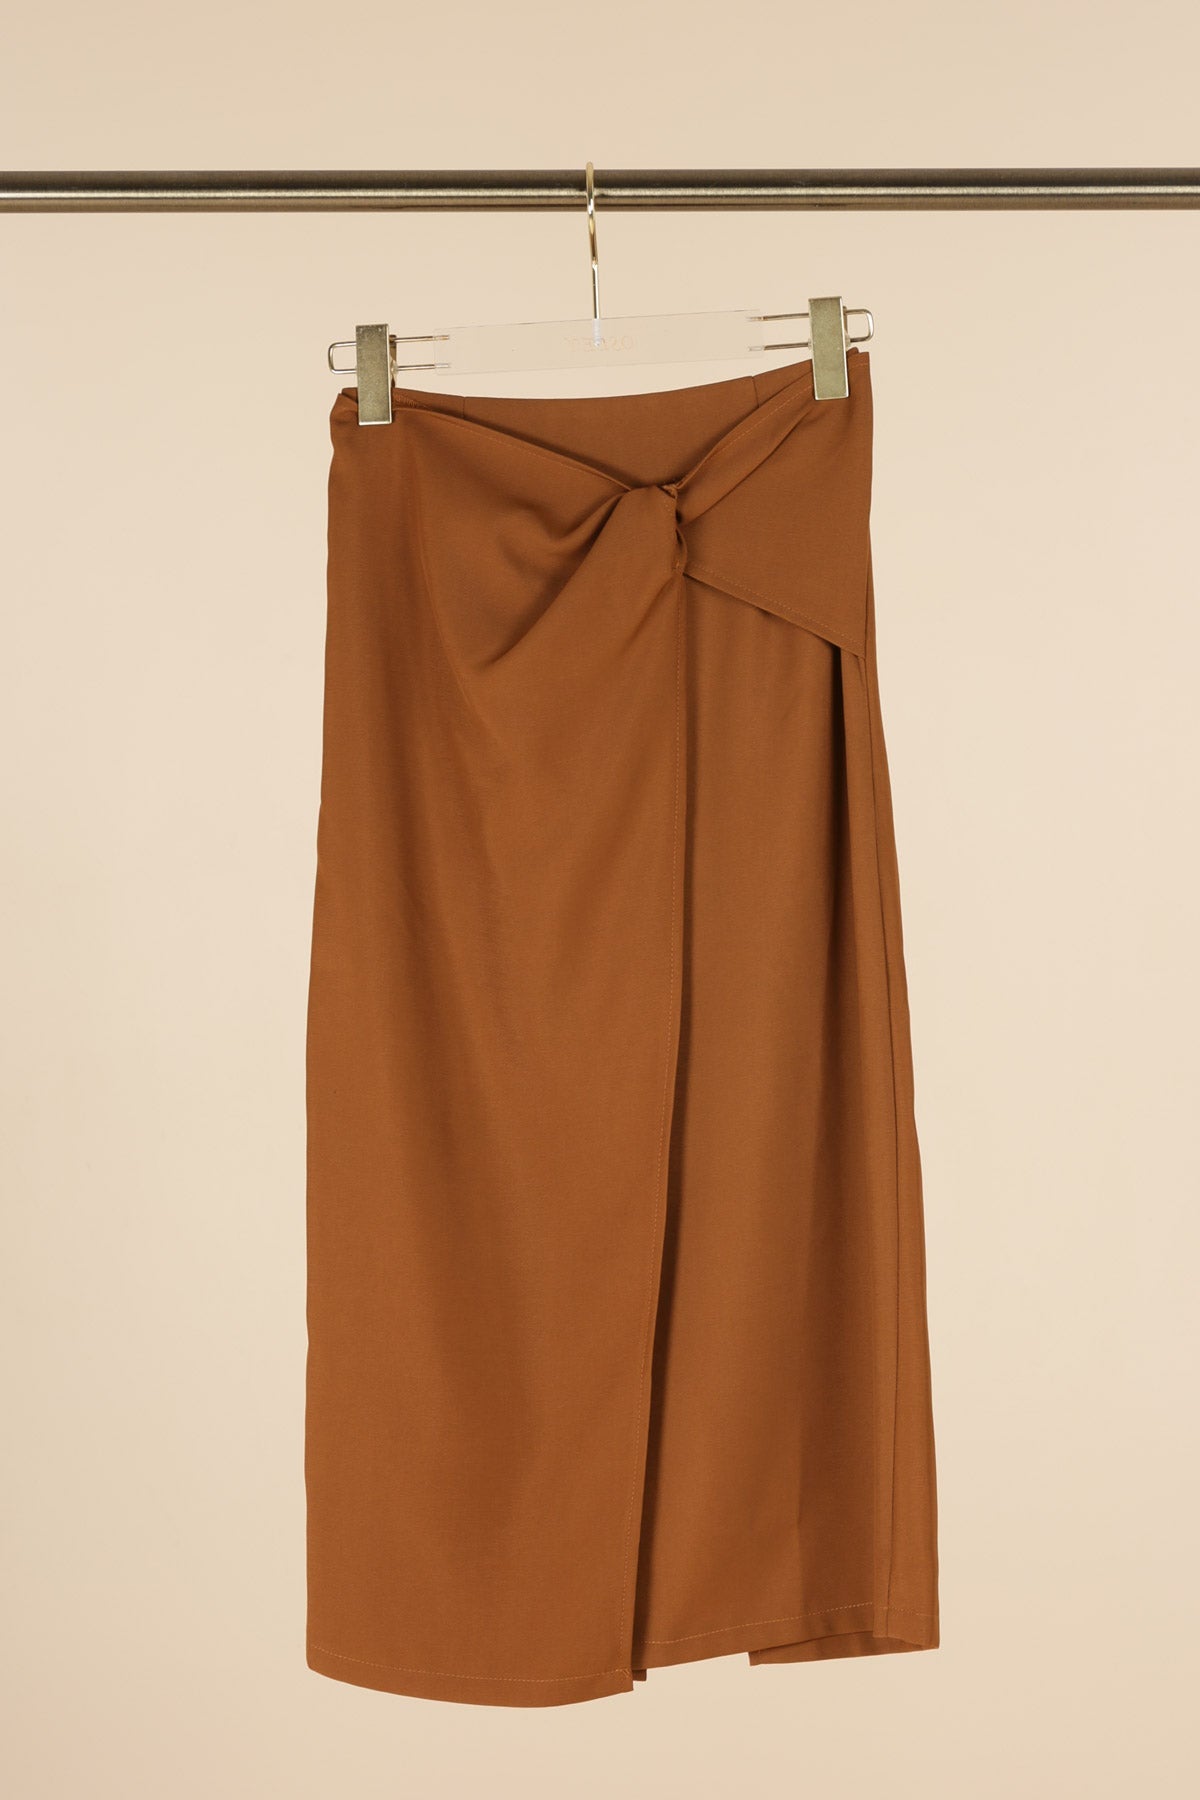 Brown Corner Tie Skirt